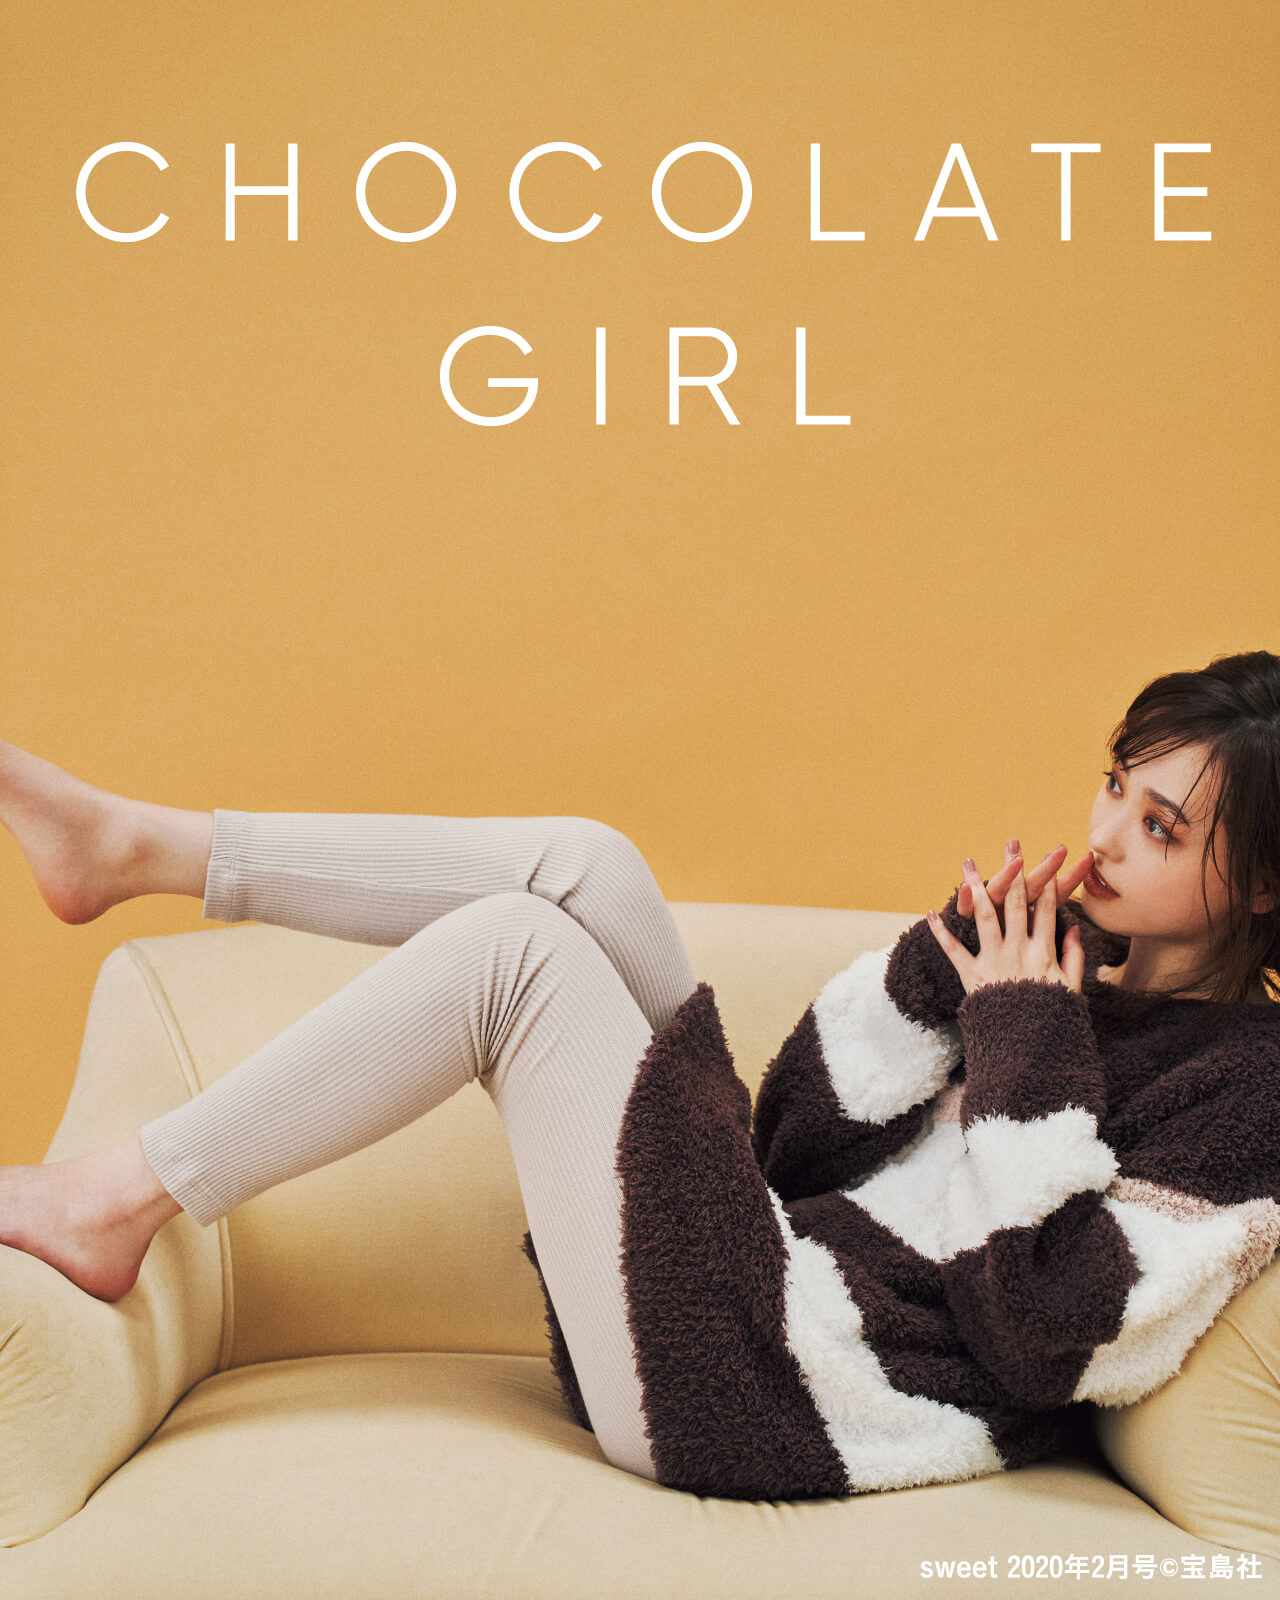 CHOCOLATE GIRL